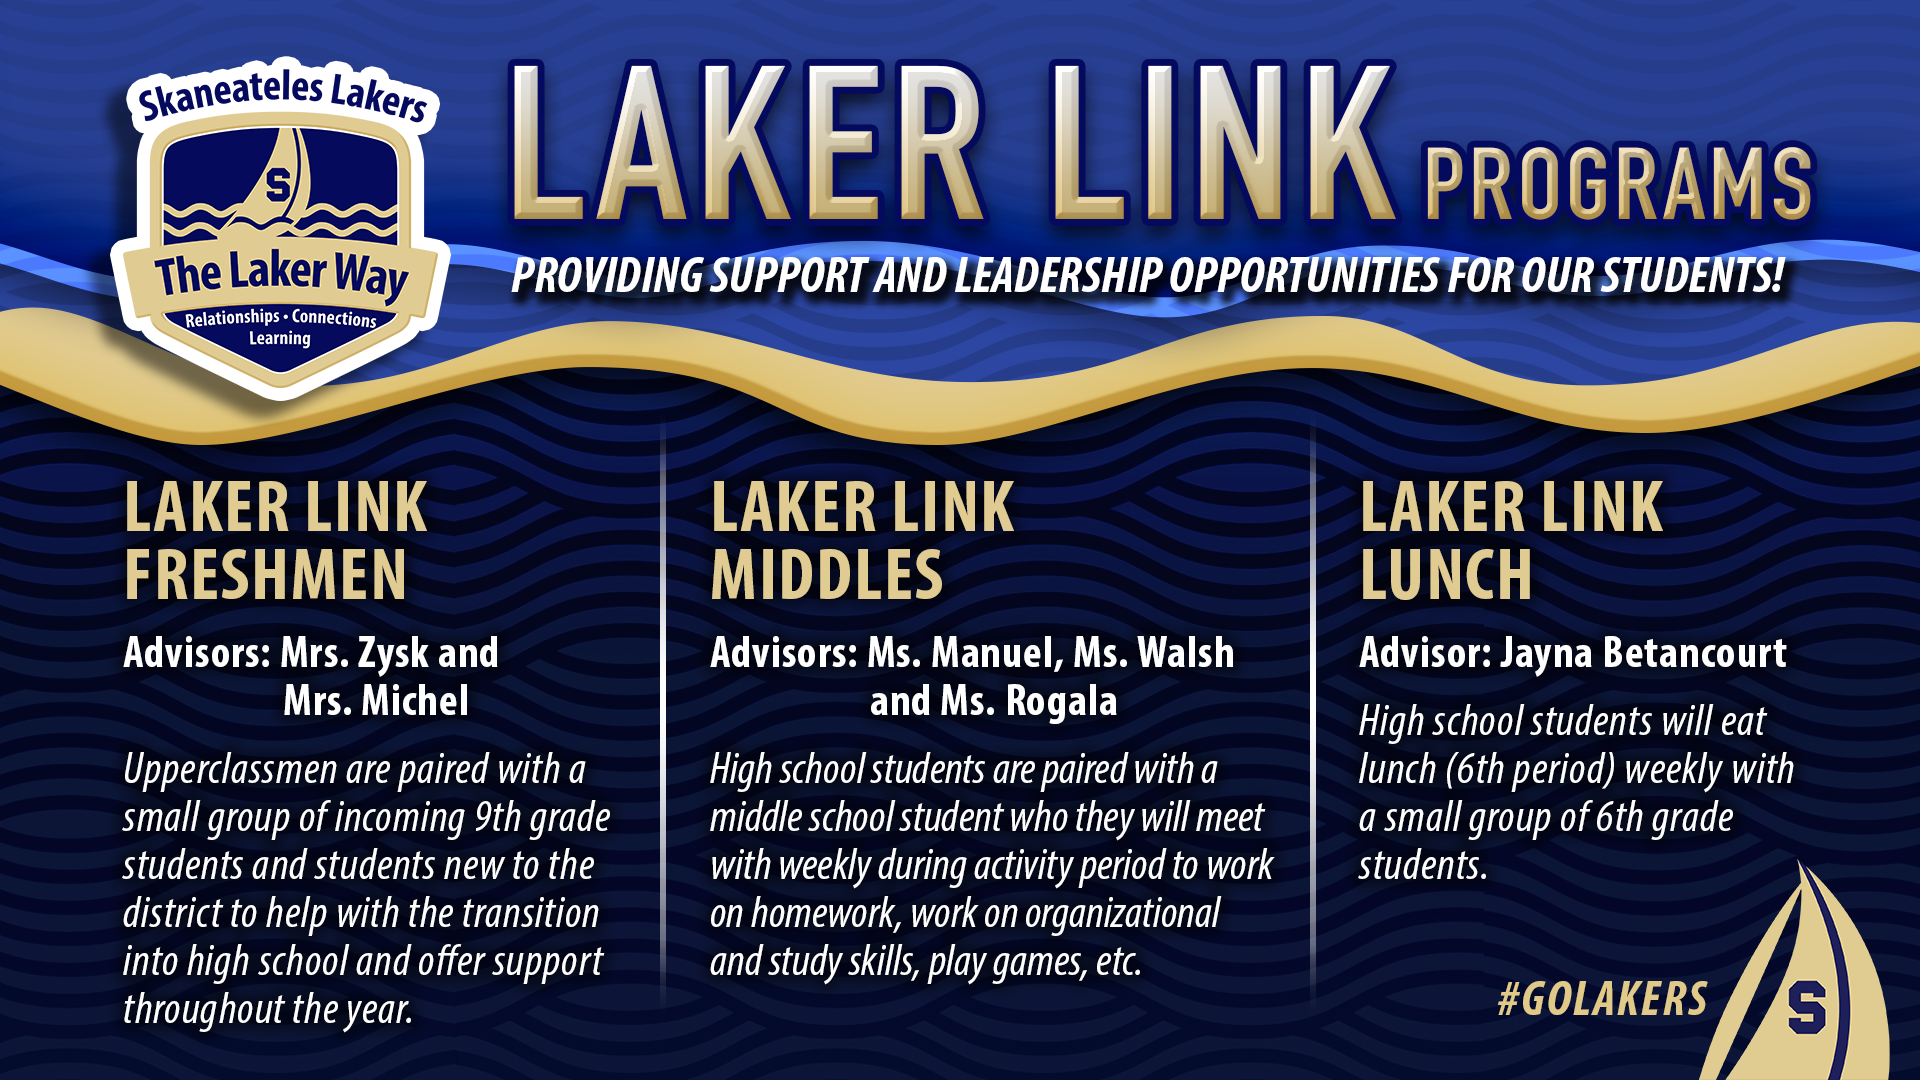 Laker Link Programs